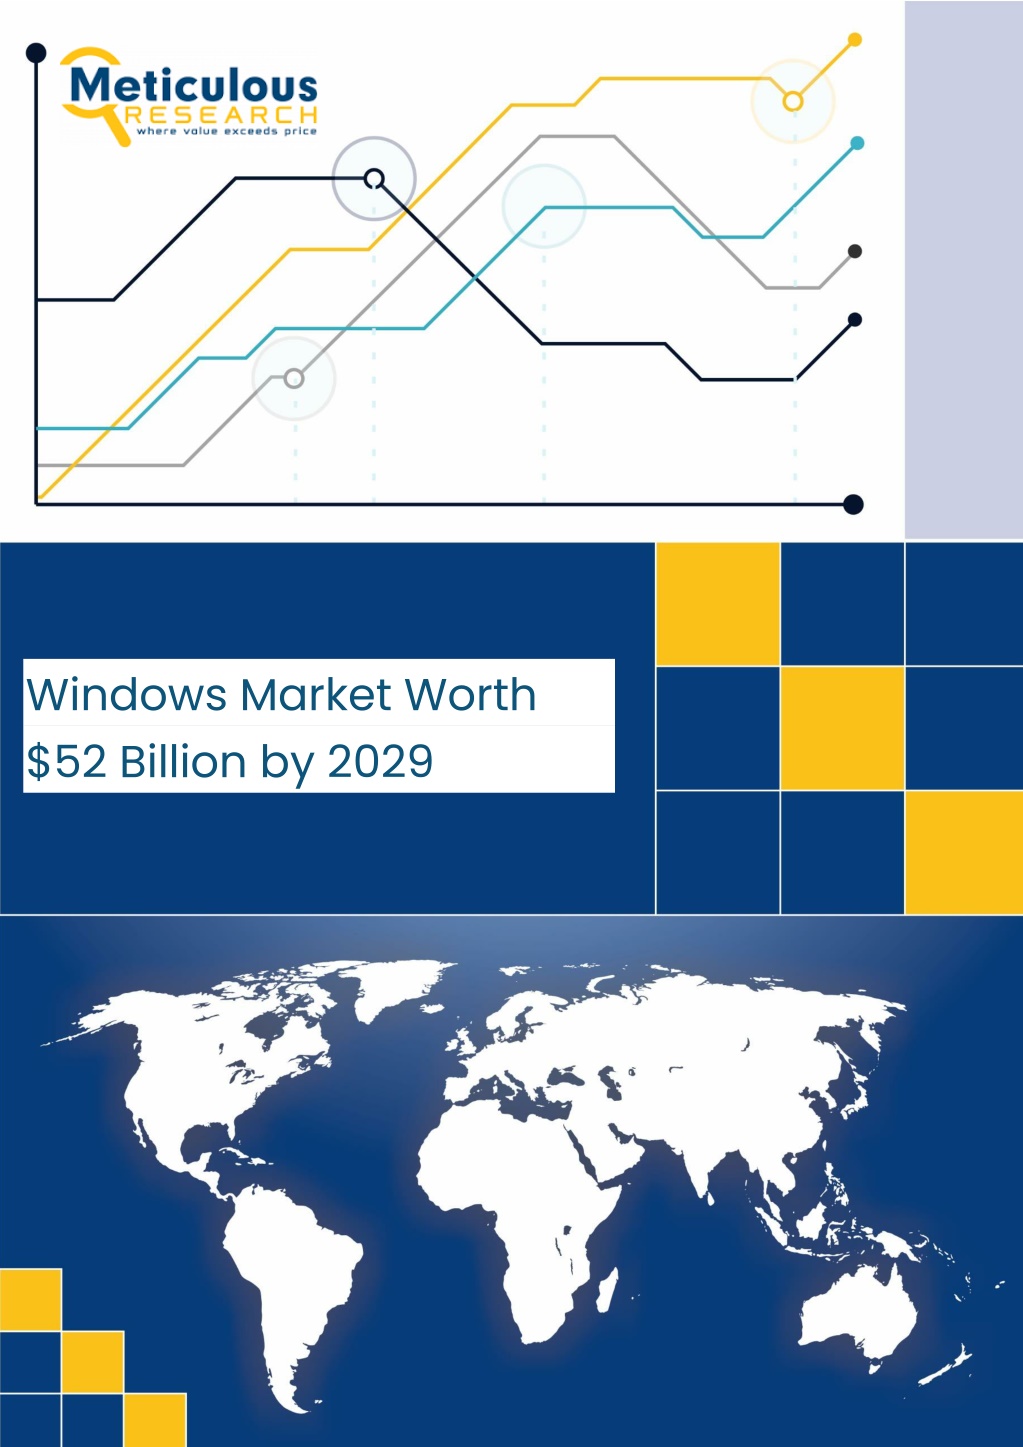 windows market worth 52 billion by 2029 l.w